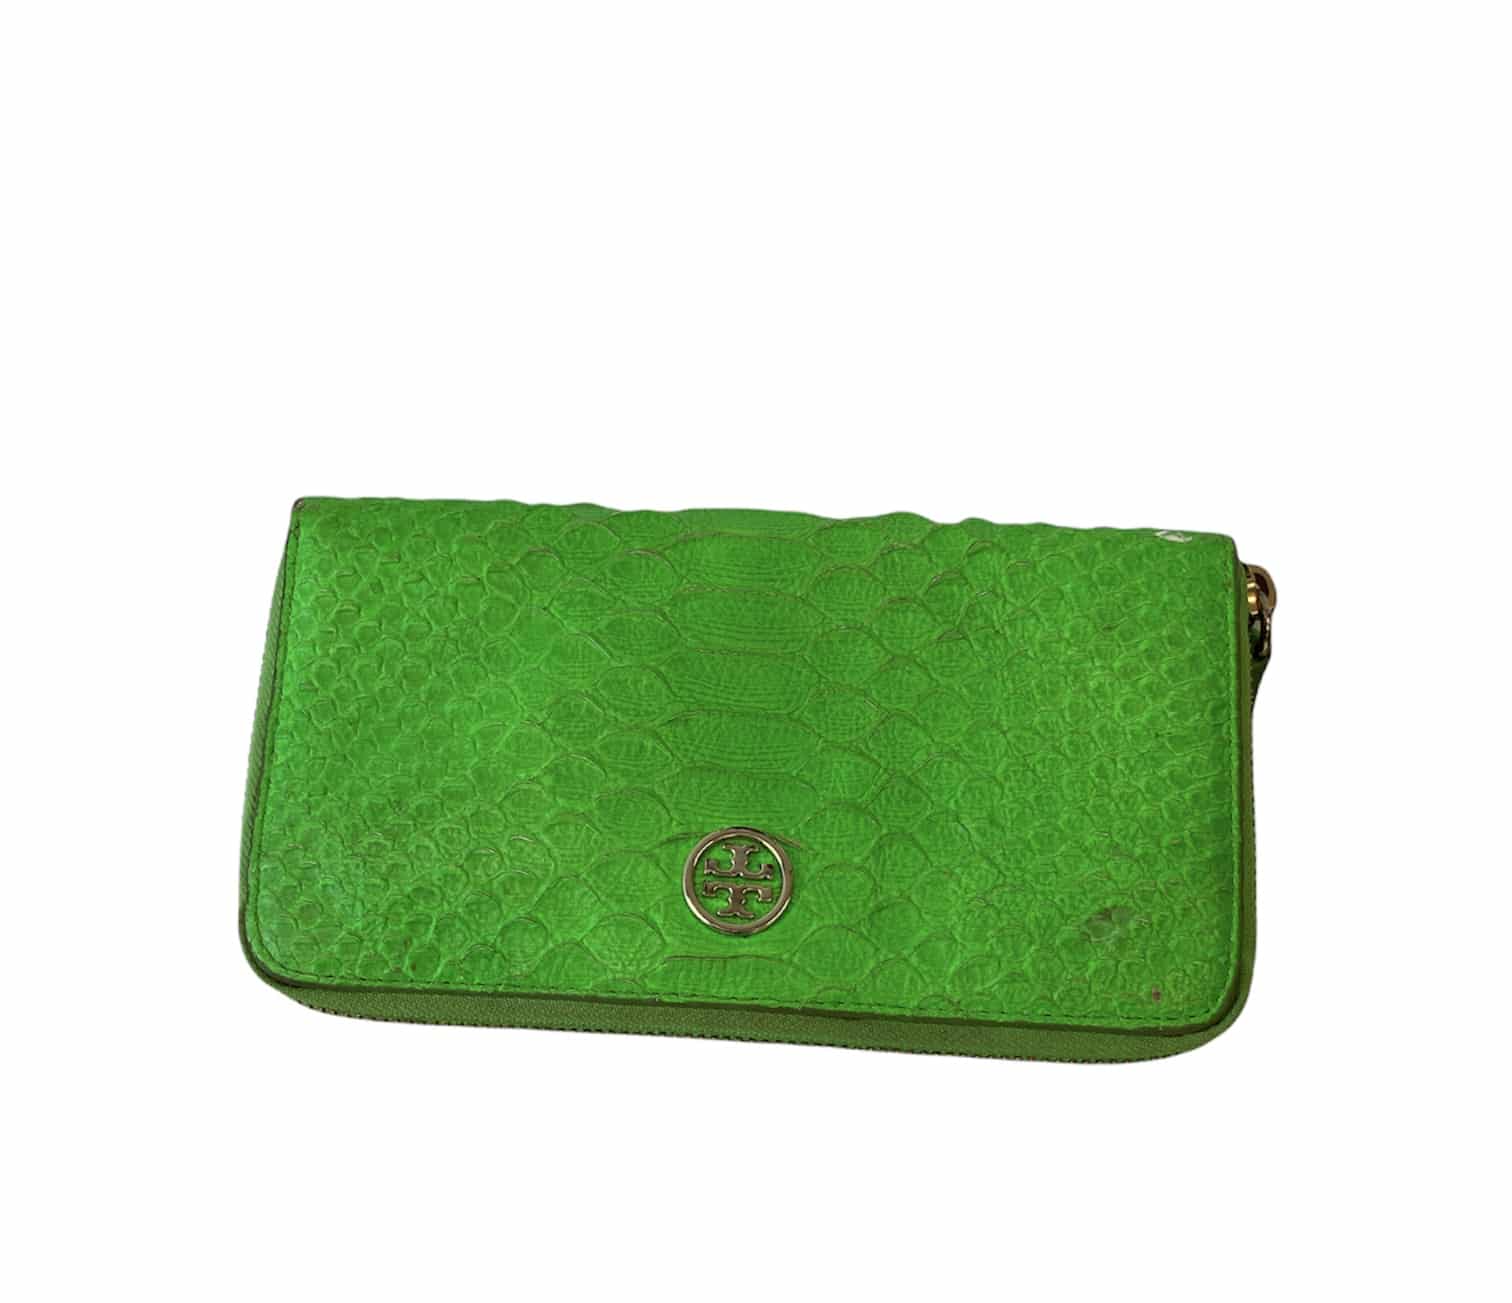 Tory Burch Neon Green wallet - The Luxury Flavor